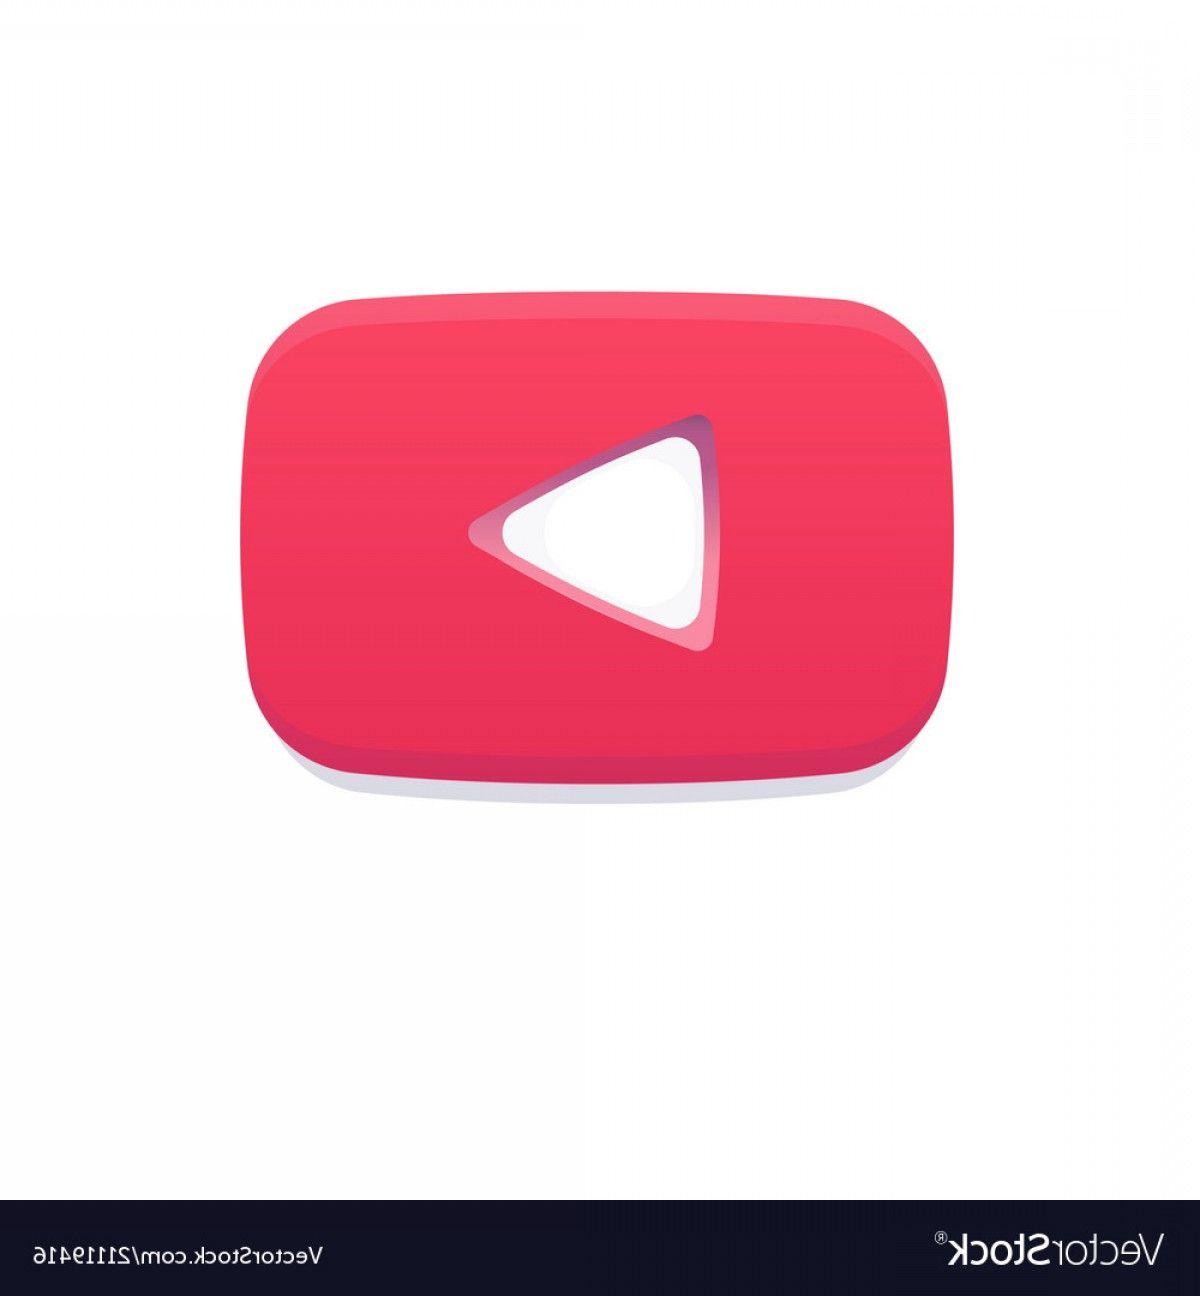 Notification Logo - Red Play Flat Logo Youtube Notification Icon Like Vector | SOIDERGI